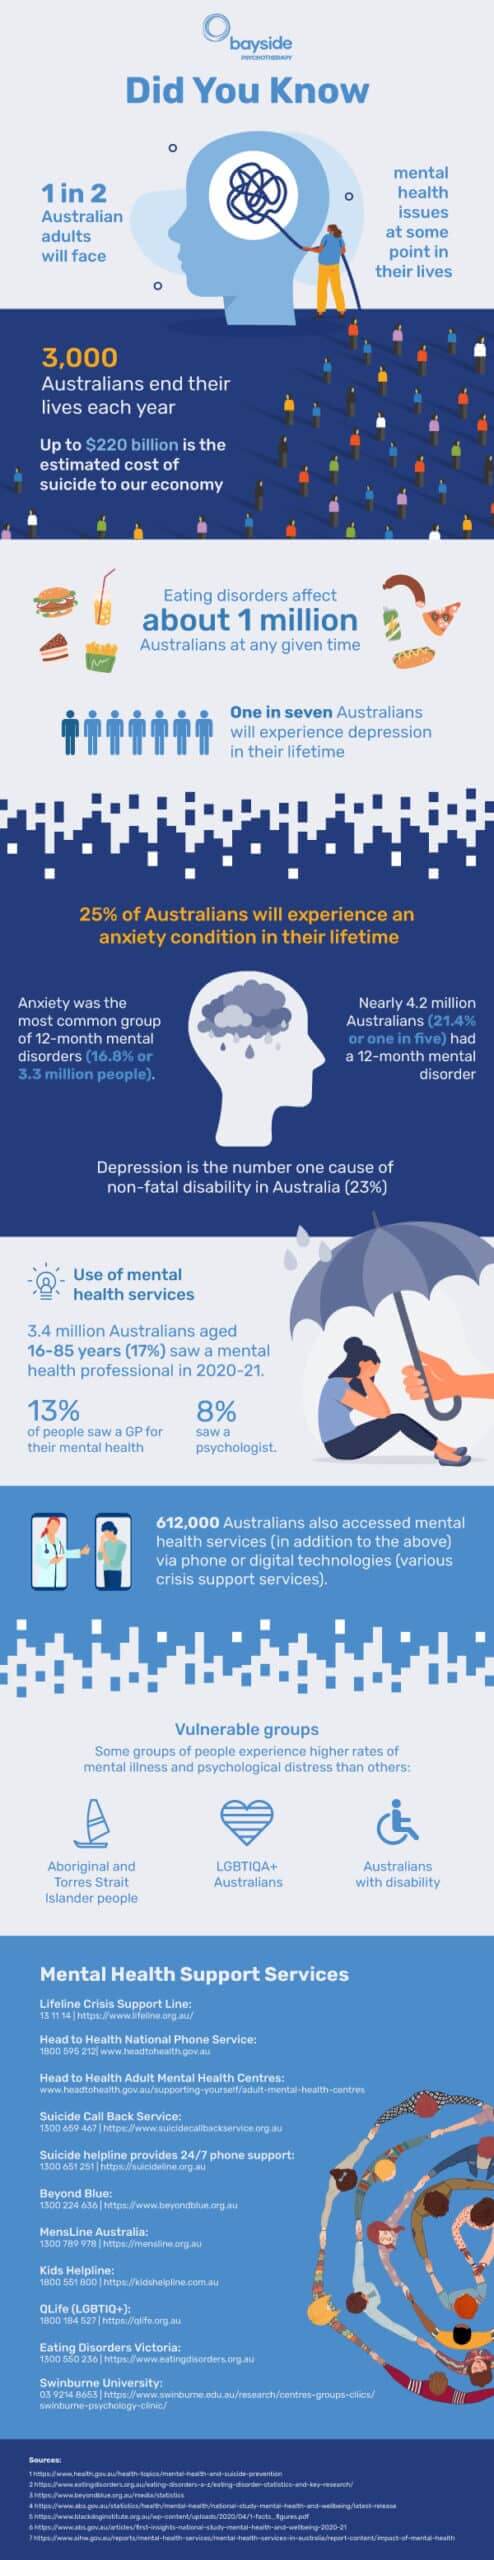 Bayside Mental Health Statistics in Australia